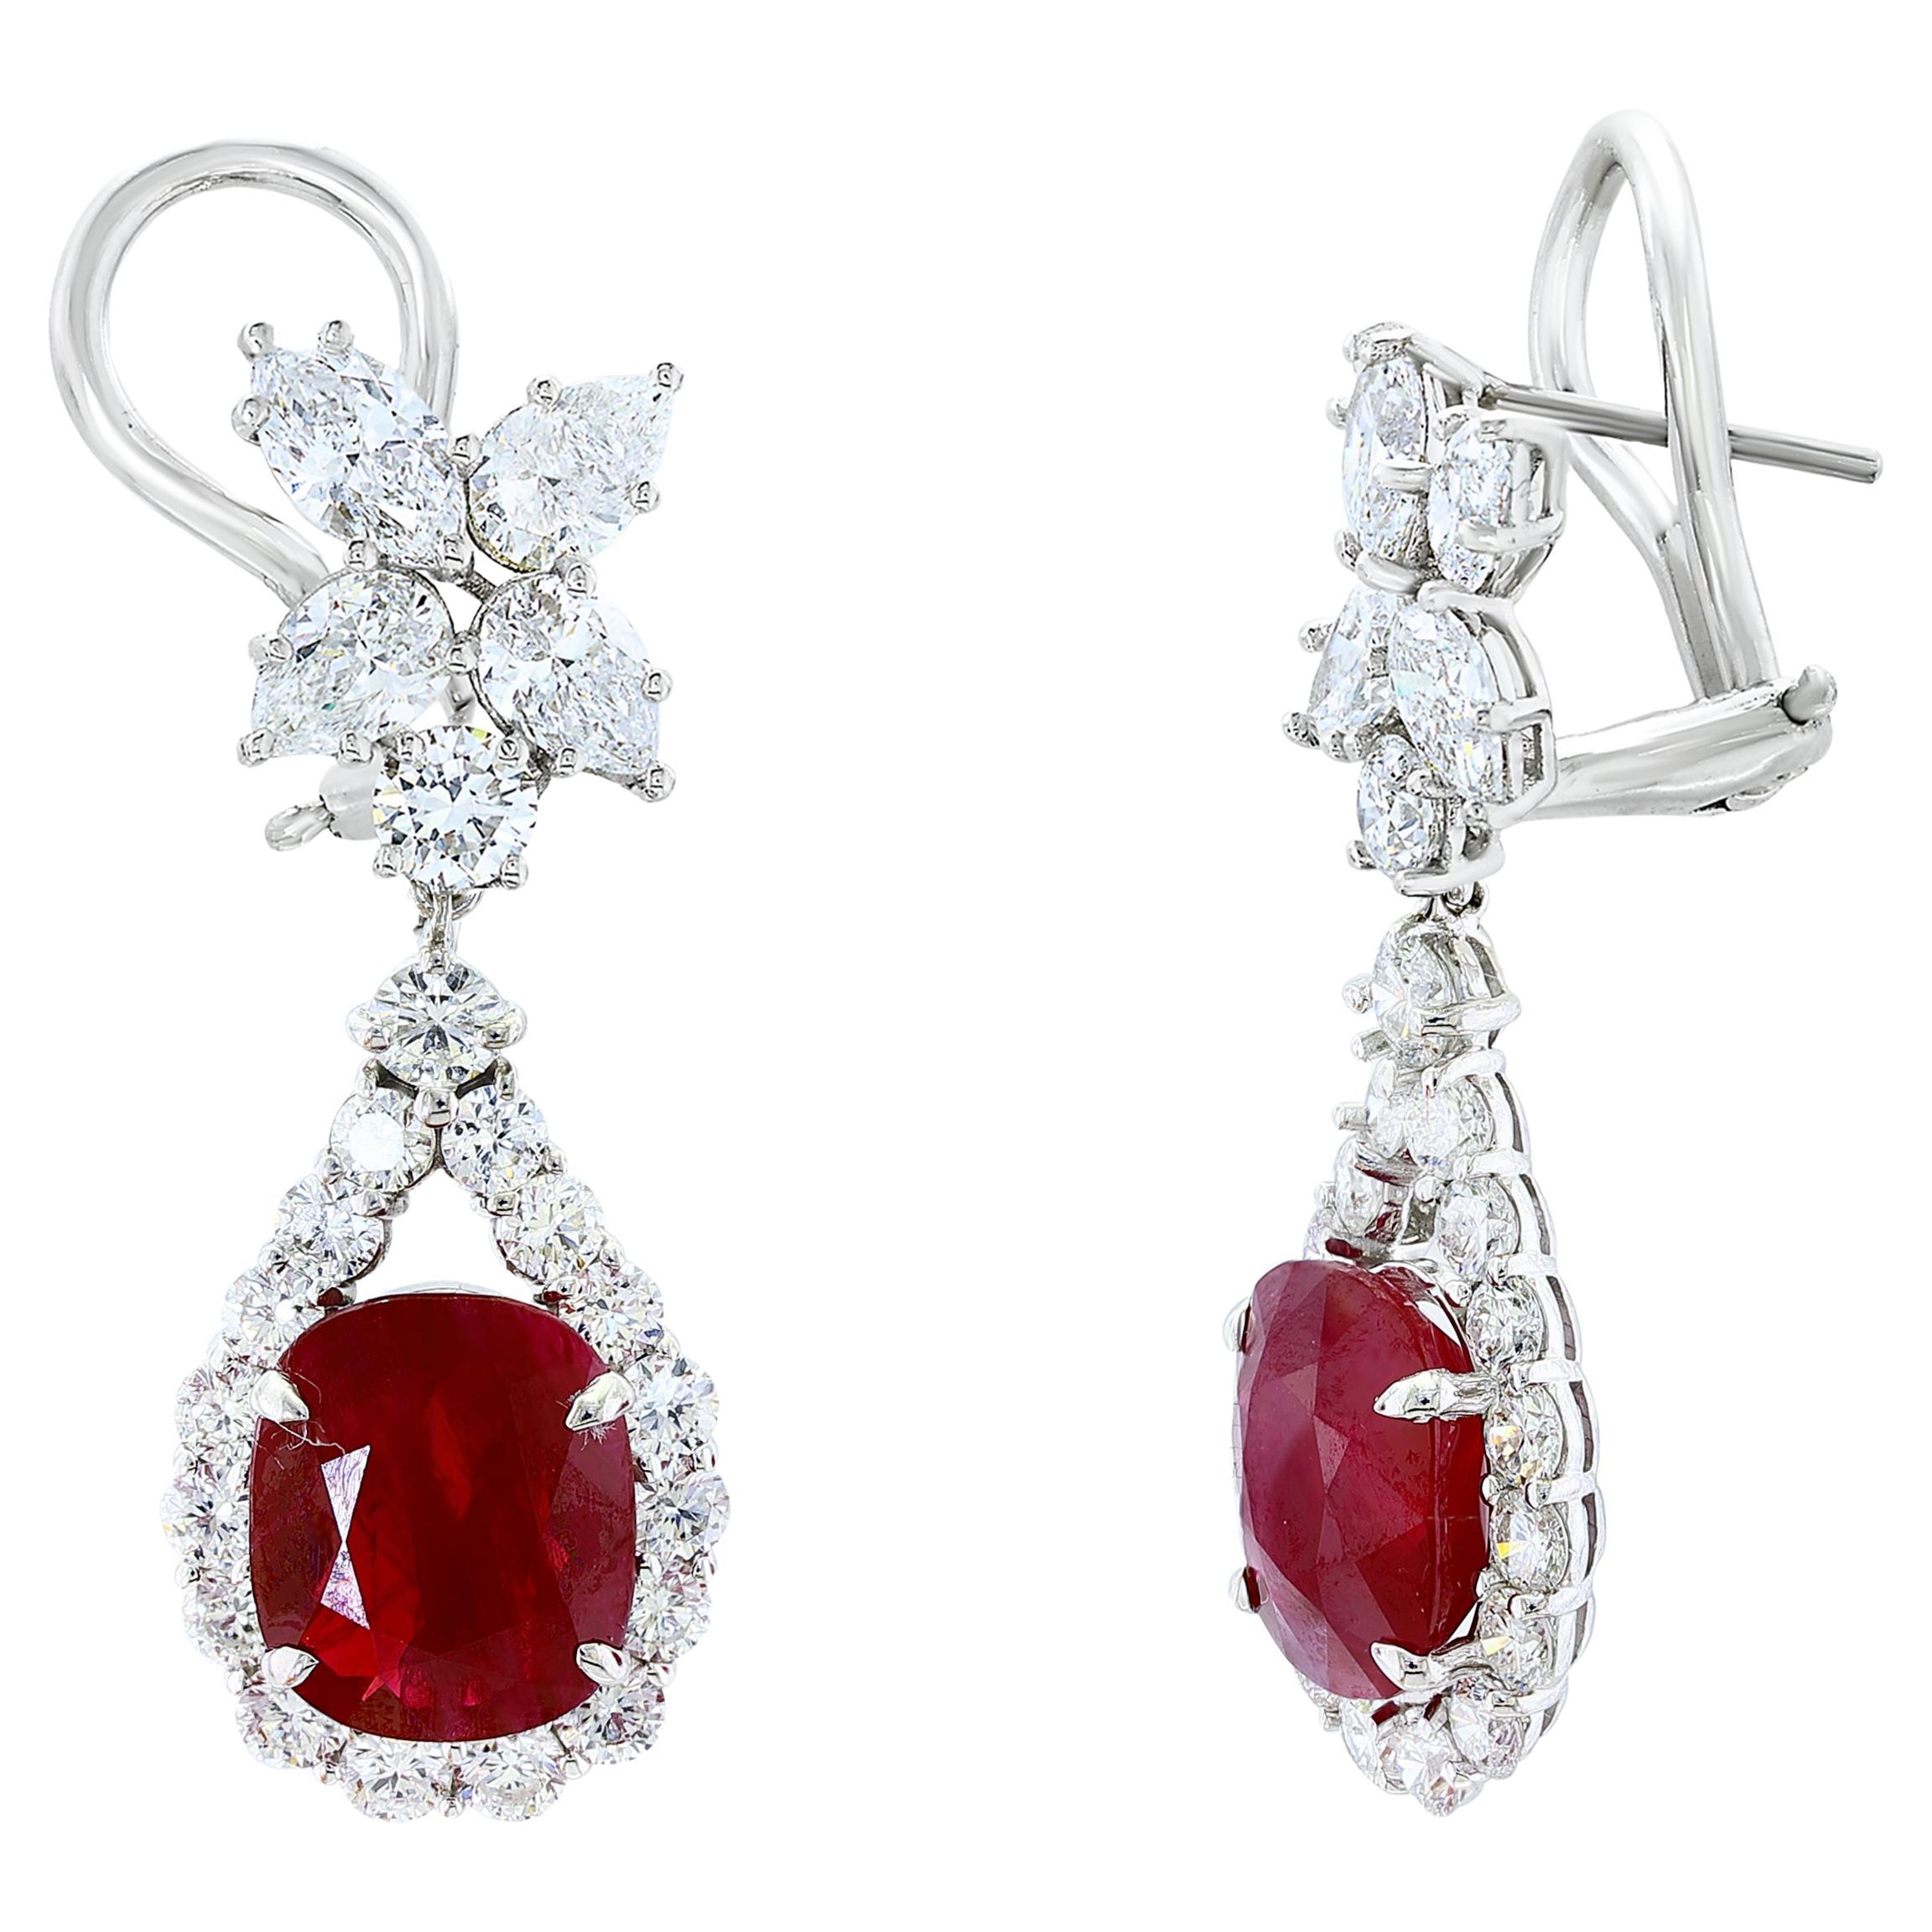 Certified 10.18 Carat Burma Ruby and Diamond Drop Earrings in 18K White Gold